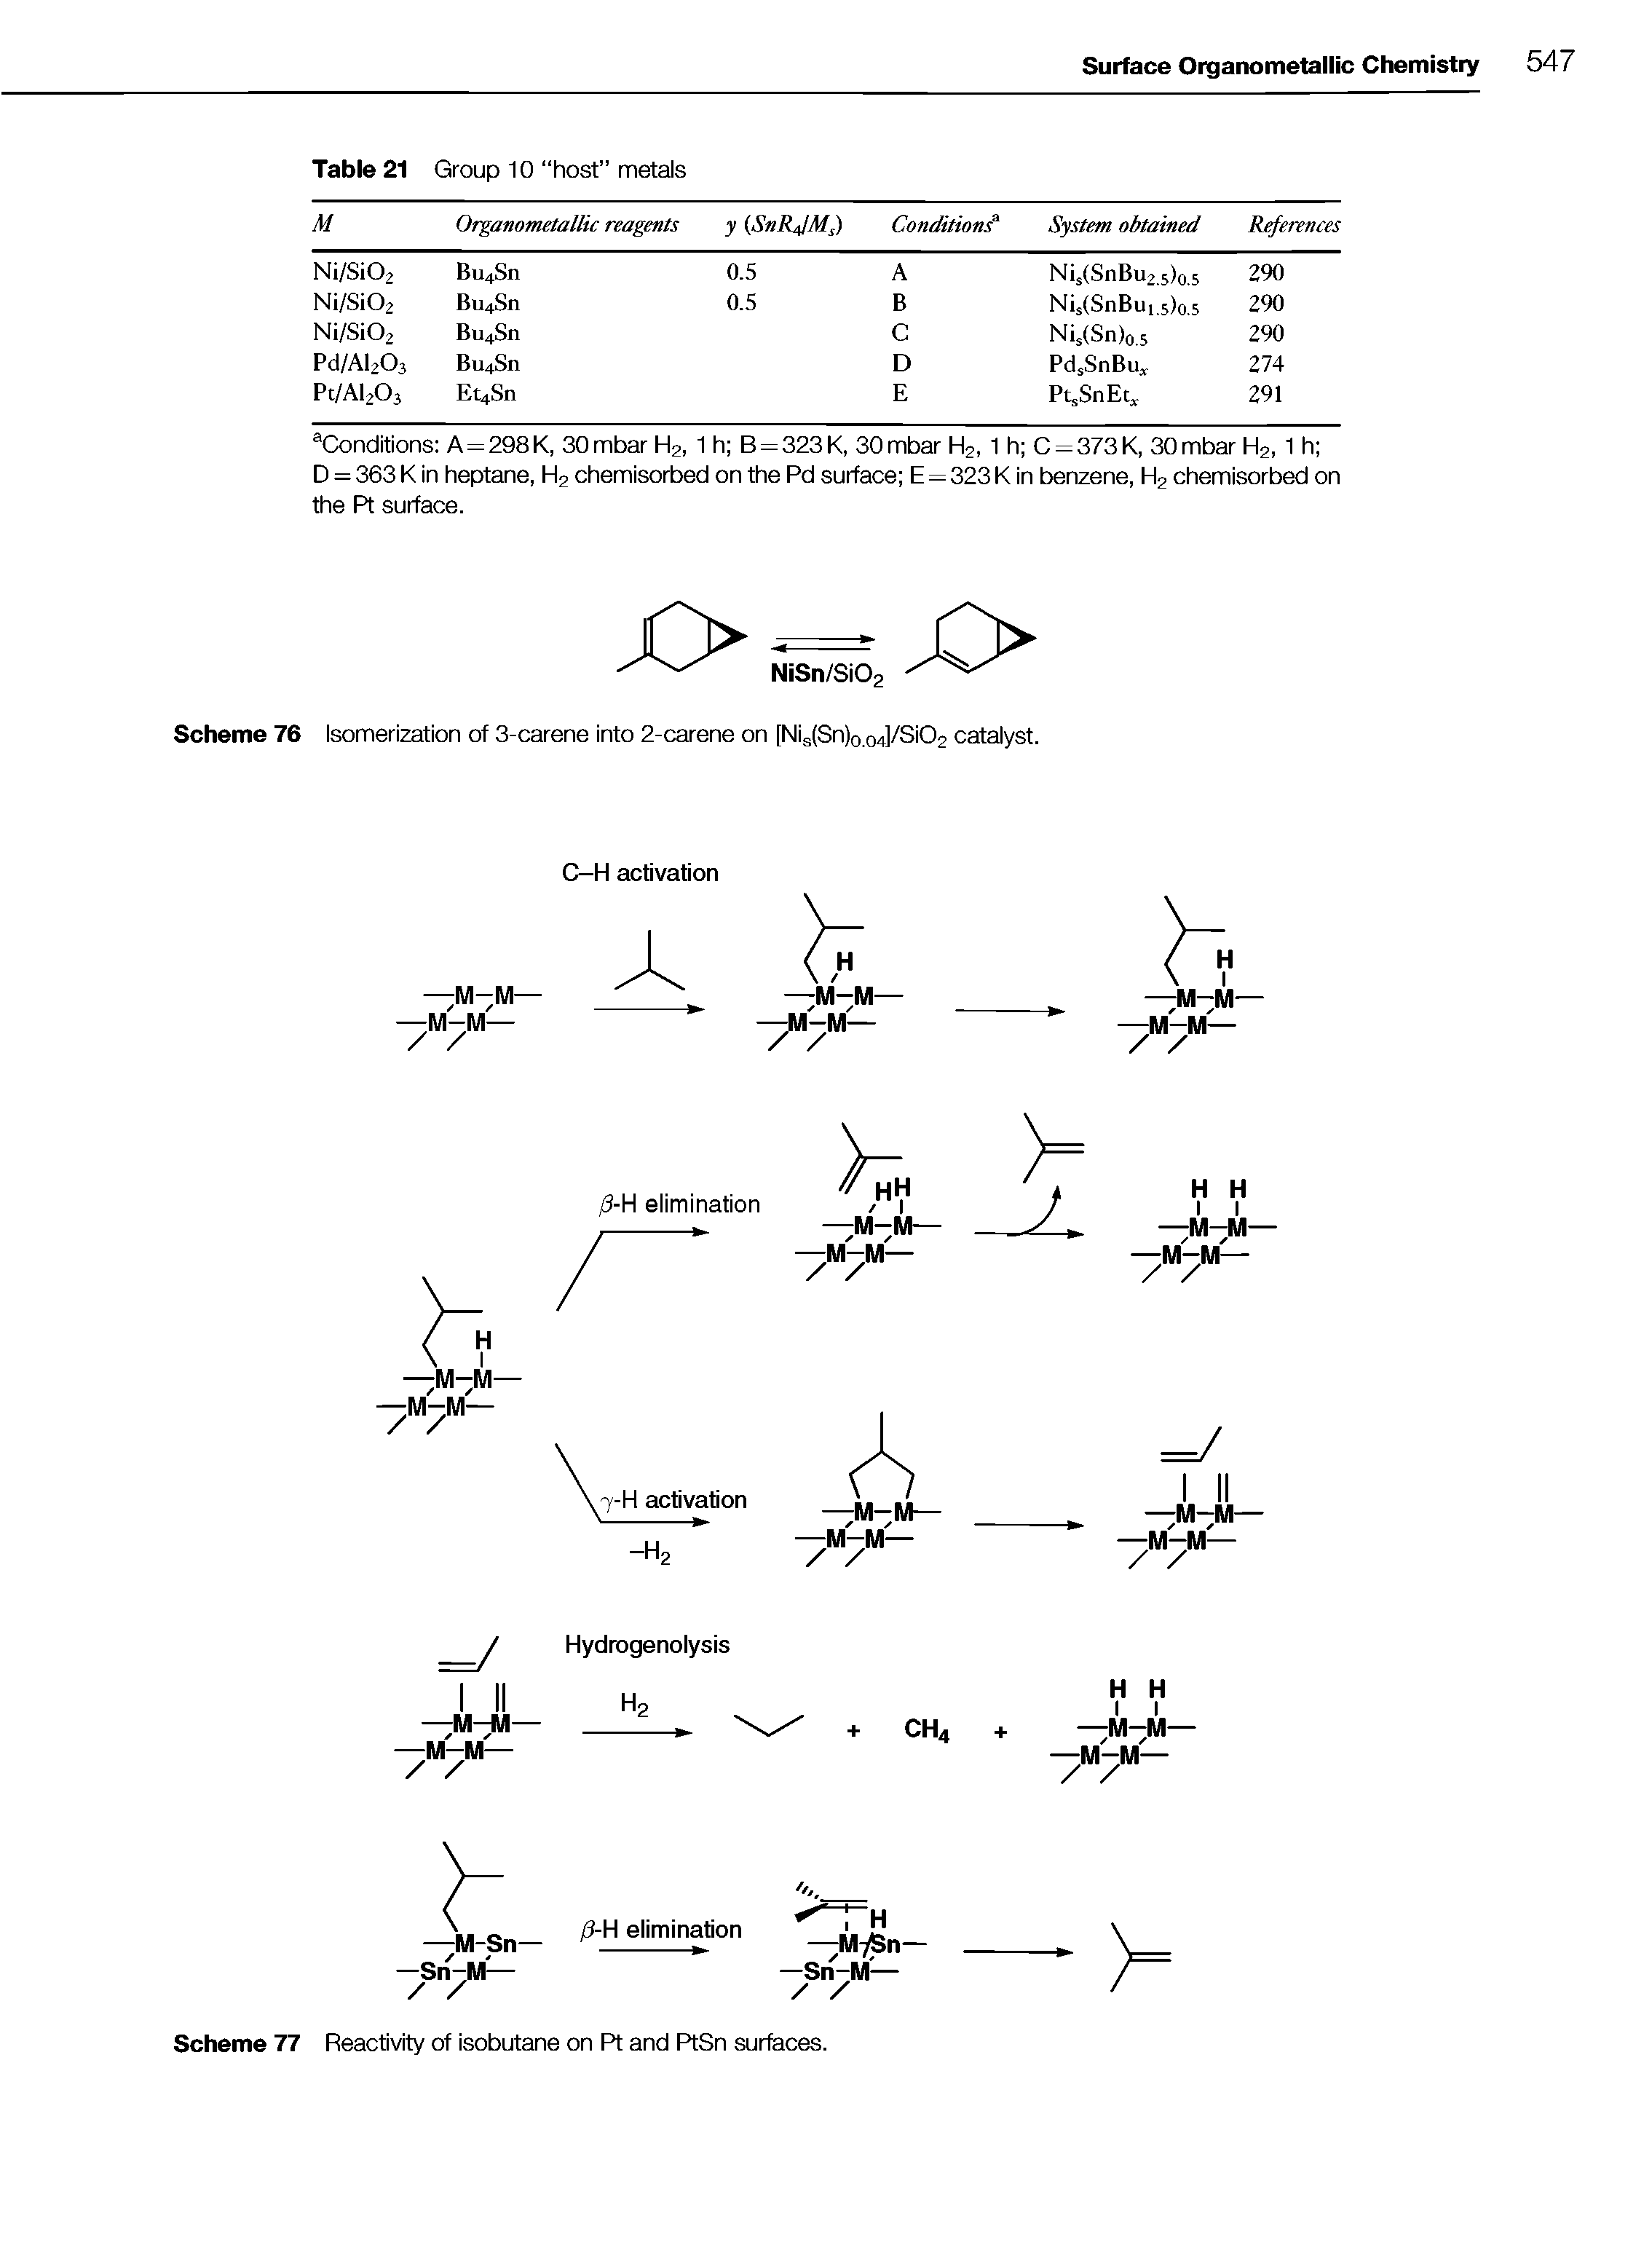 Scheme 76 Isomerization of 3-carene into 2-carene on [Nig(Sn)o,o4]/Si02 catalyst.